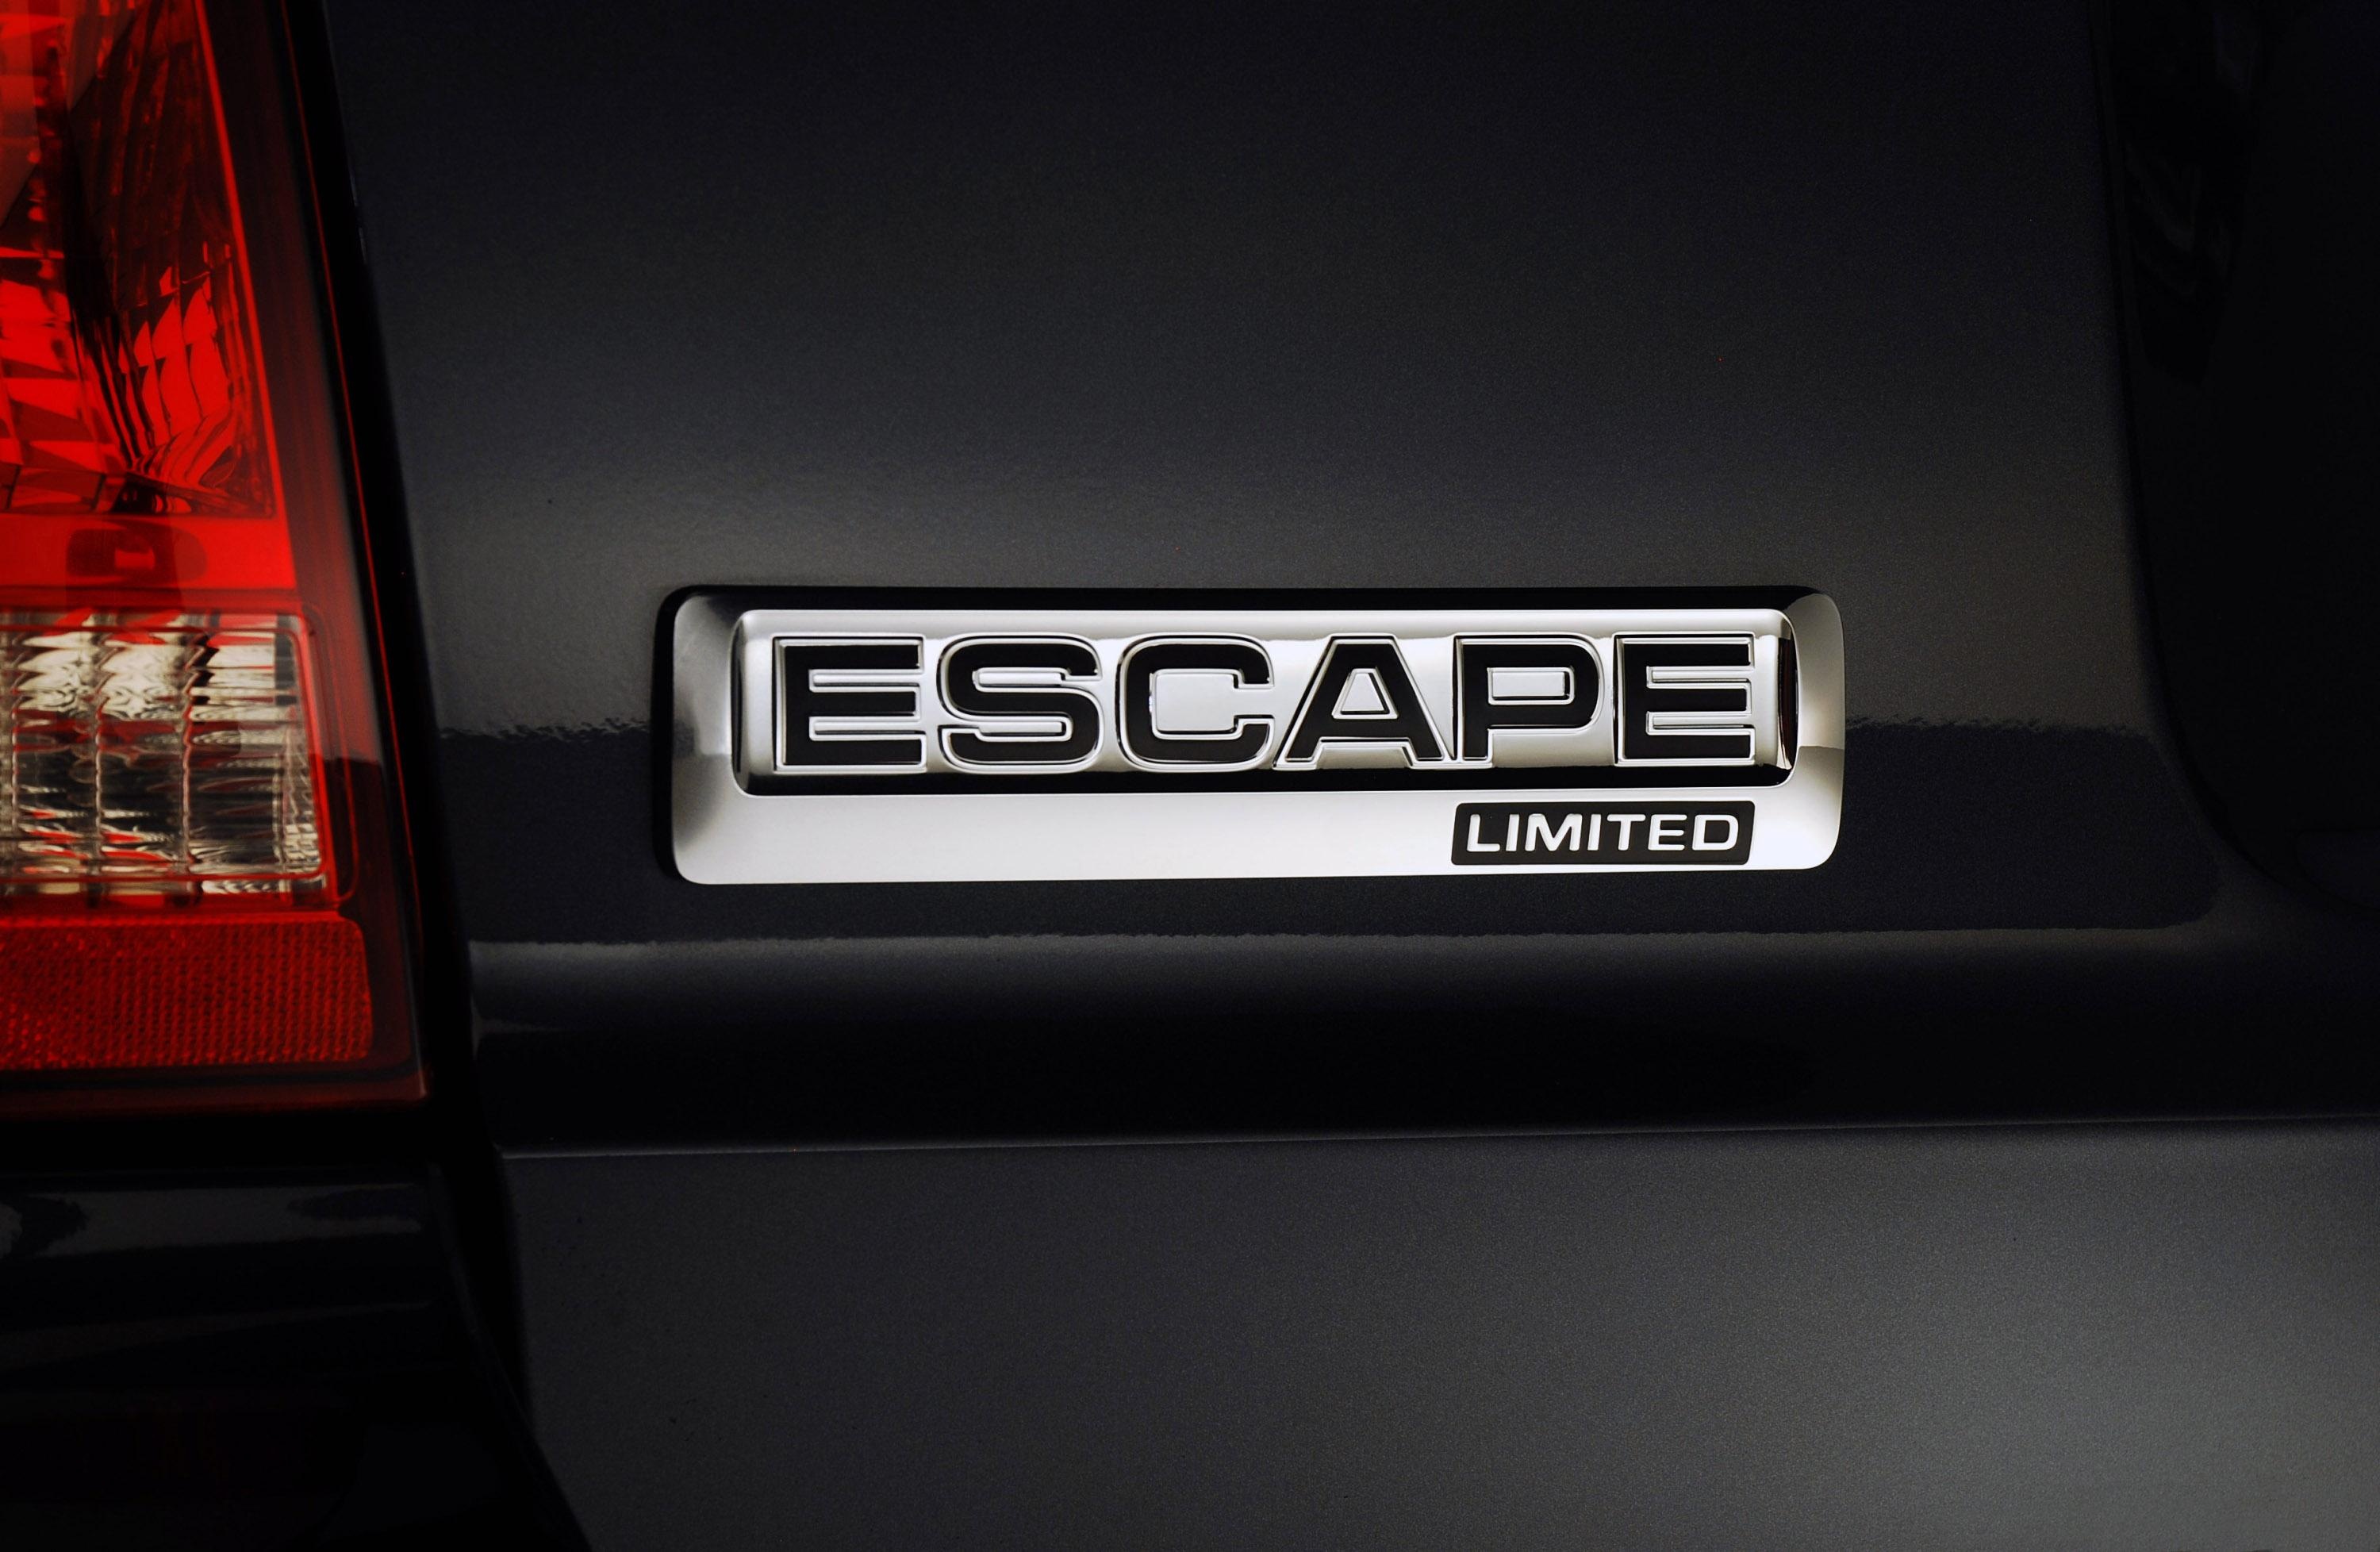 Ford Escape, 2009 model, HD picture, Captivating design, 3000x1960 HD Desktop